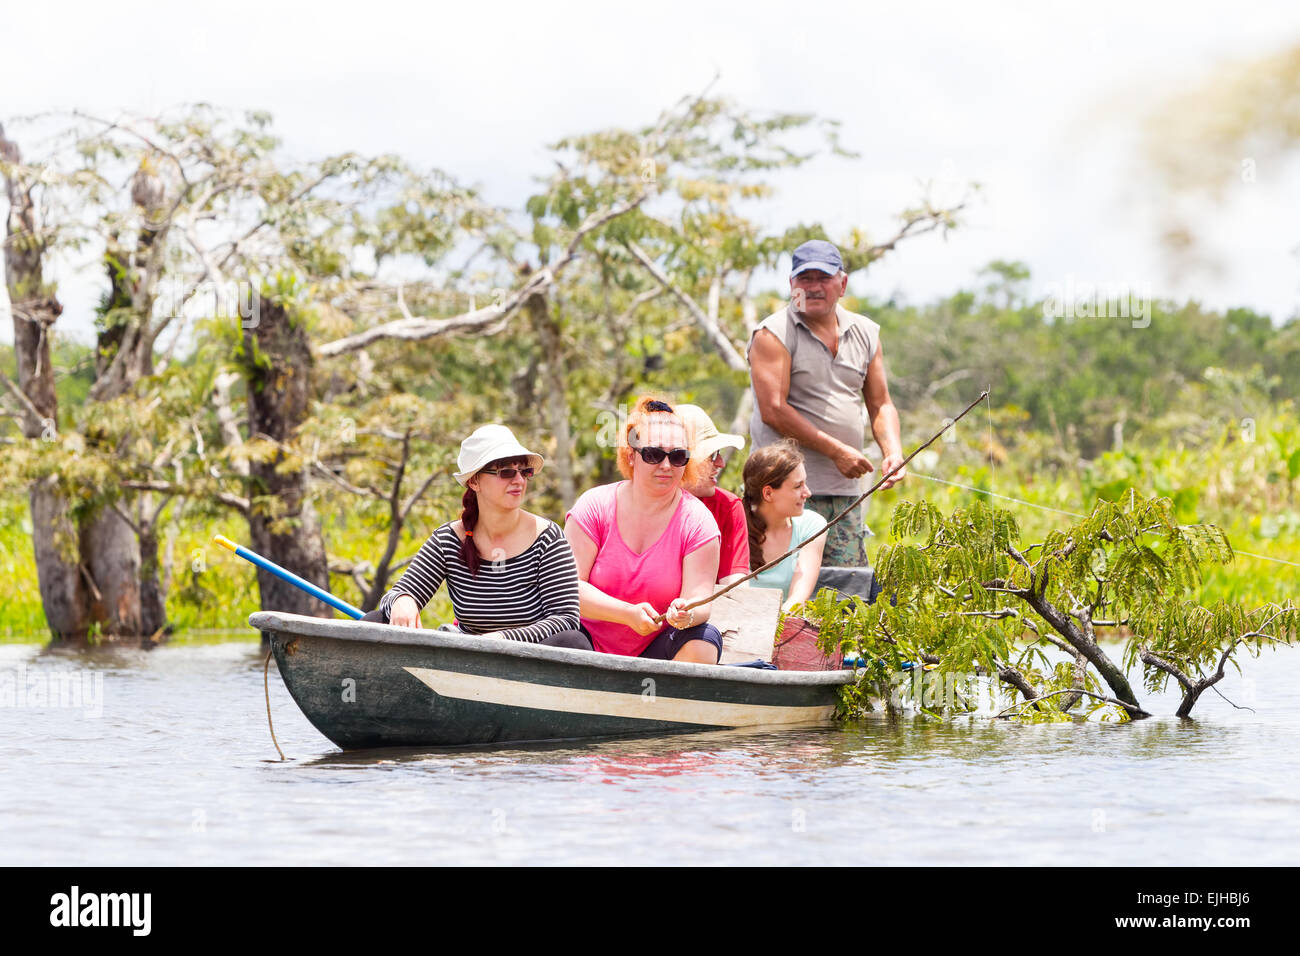 Tourists Fishing Legendary Piranha Fish In Ecuadorian Amazon Primary Jungle Stock Photo